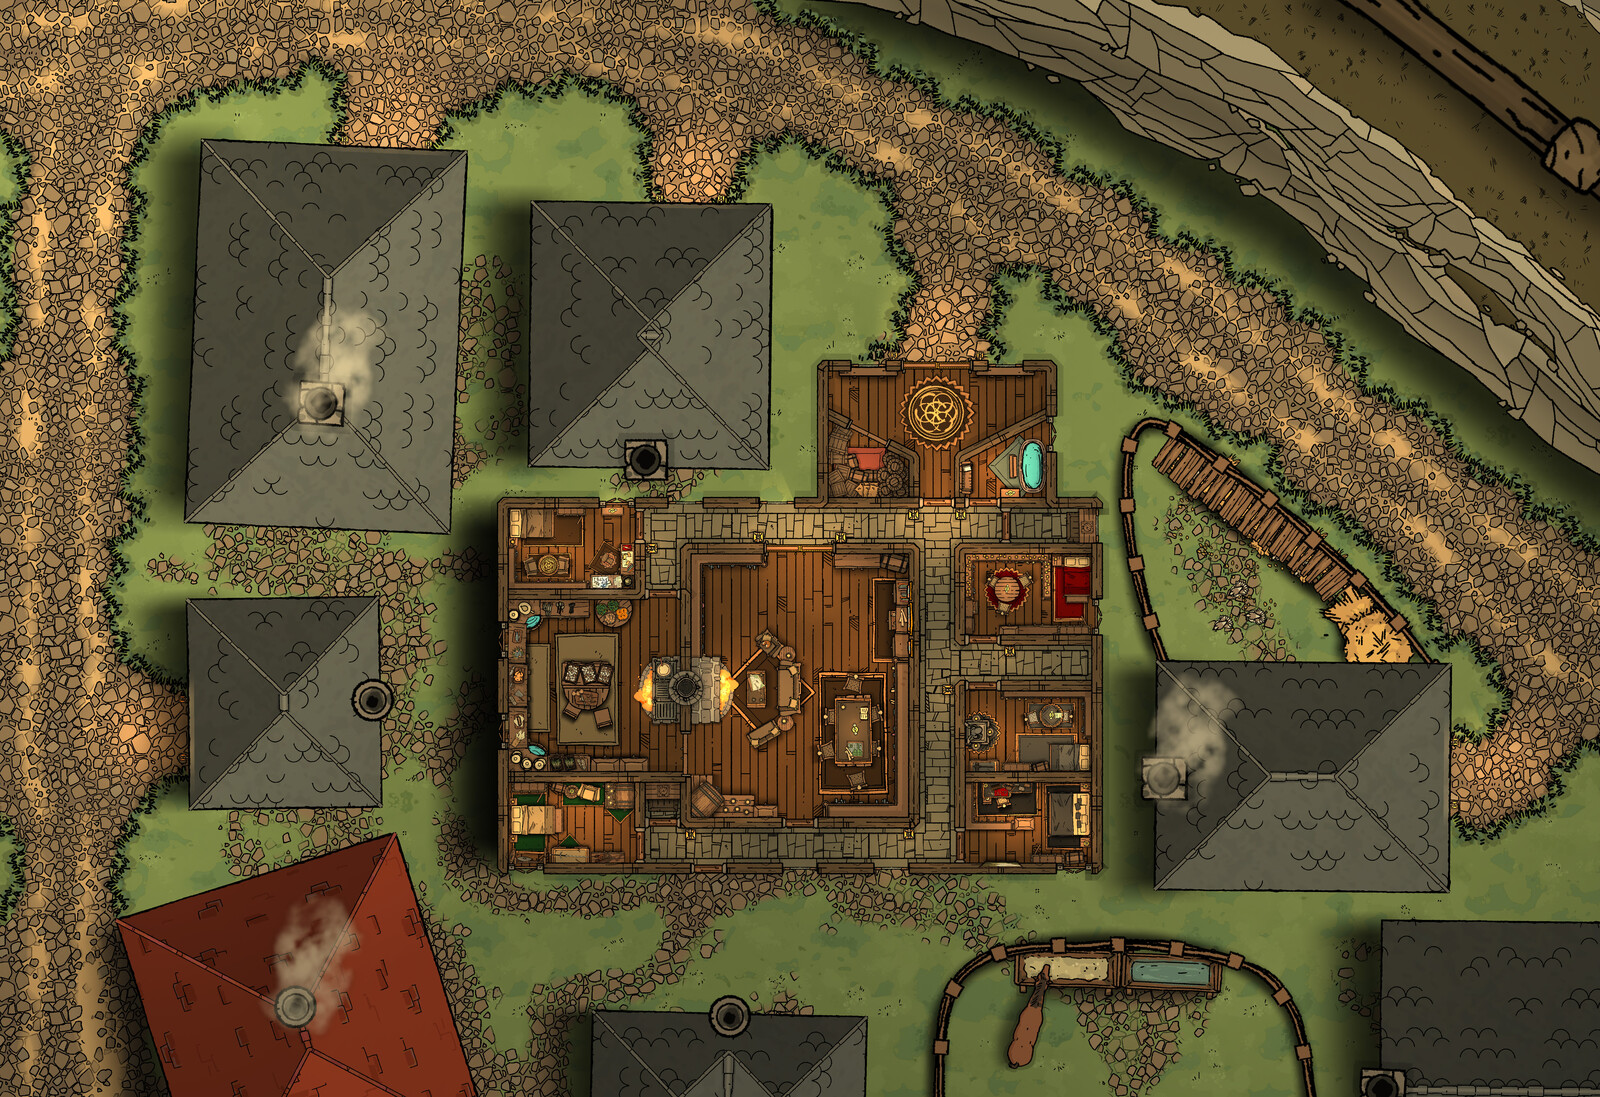 Player Headquarters in Port Village | Leilon [35 x 24]